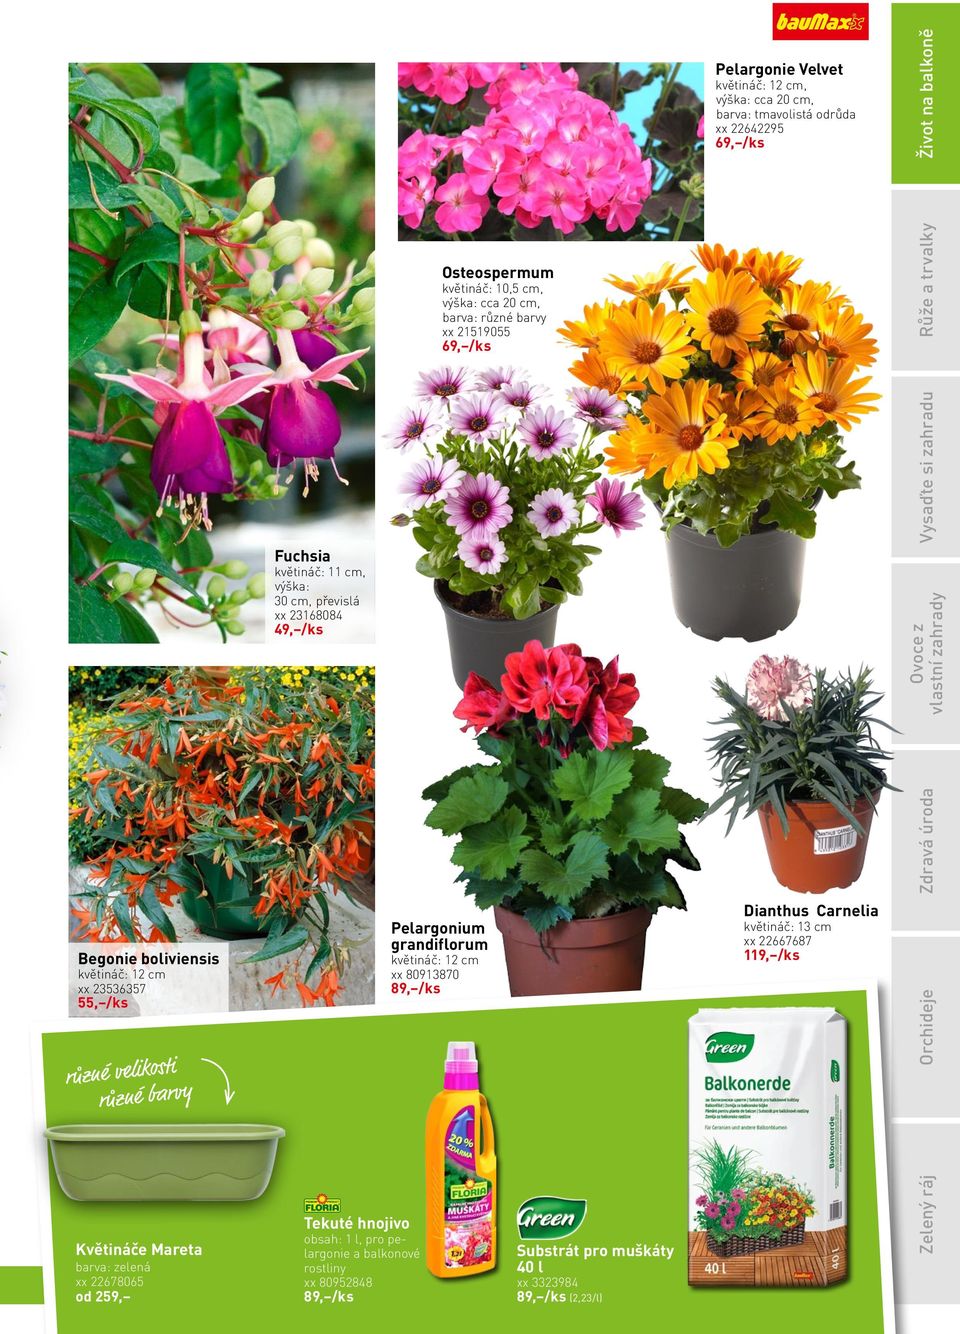 květináč: 12 cm xx 23536357 55, /ks různé velikosti různé barvy Pelargonium grandiflorum květináč: 12 cm xx 80913870 89, /ks Dianthus Carnelia květináč: 13 cm xx 22667687 119, /ks